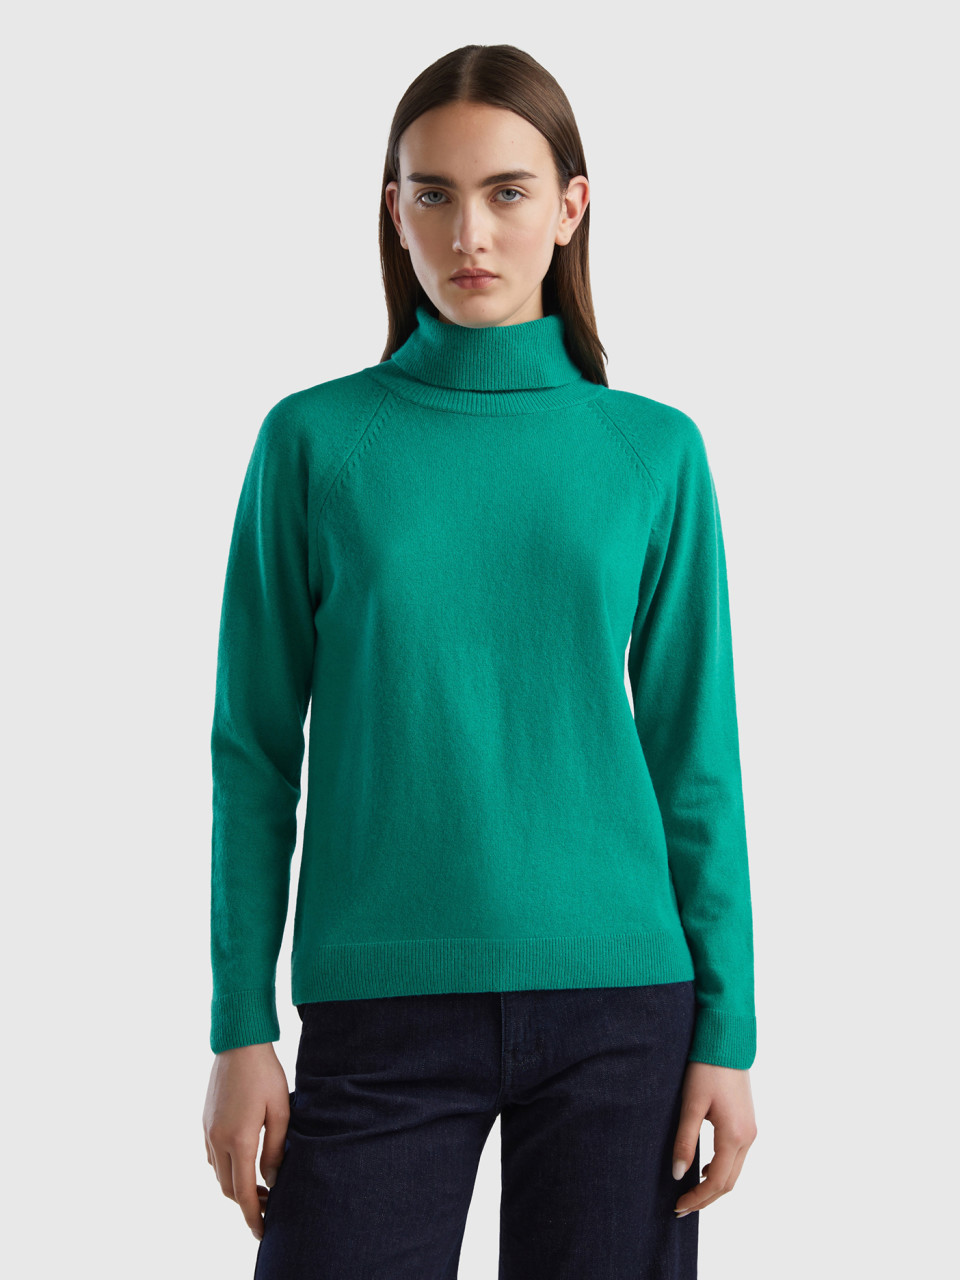 Benetton, Aqua Green Turtleneck Sweater In Cashmere And Wool Blend, Aqua, Women